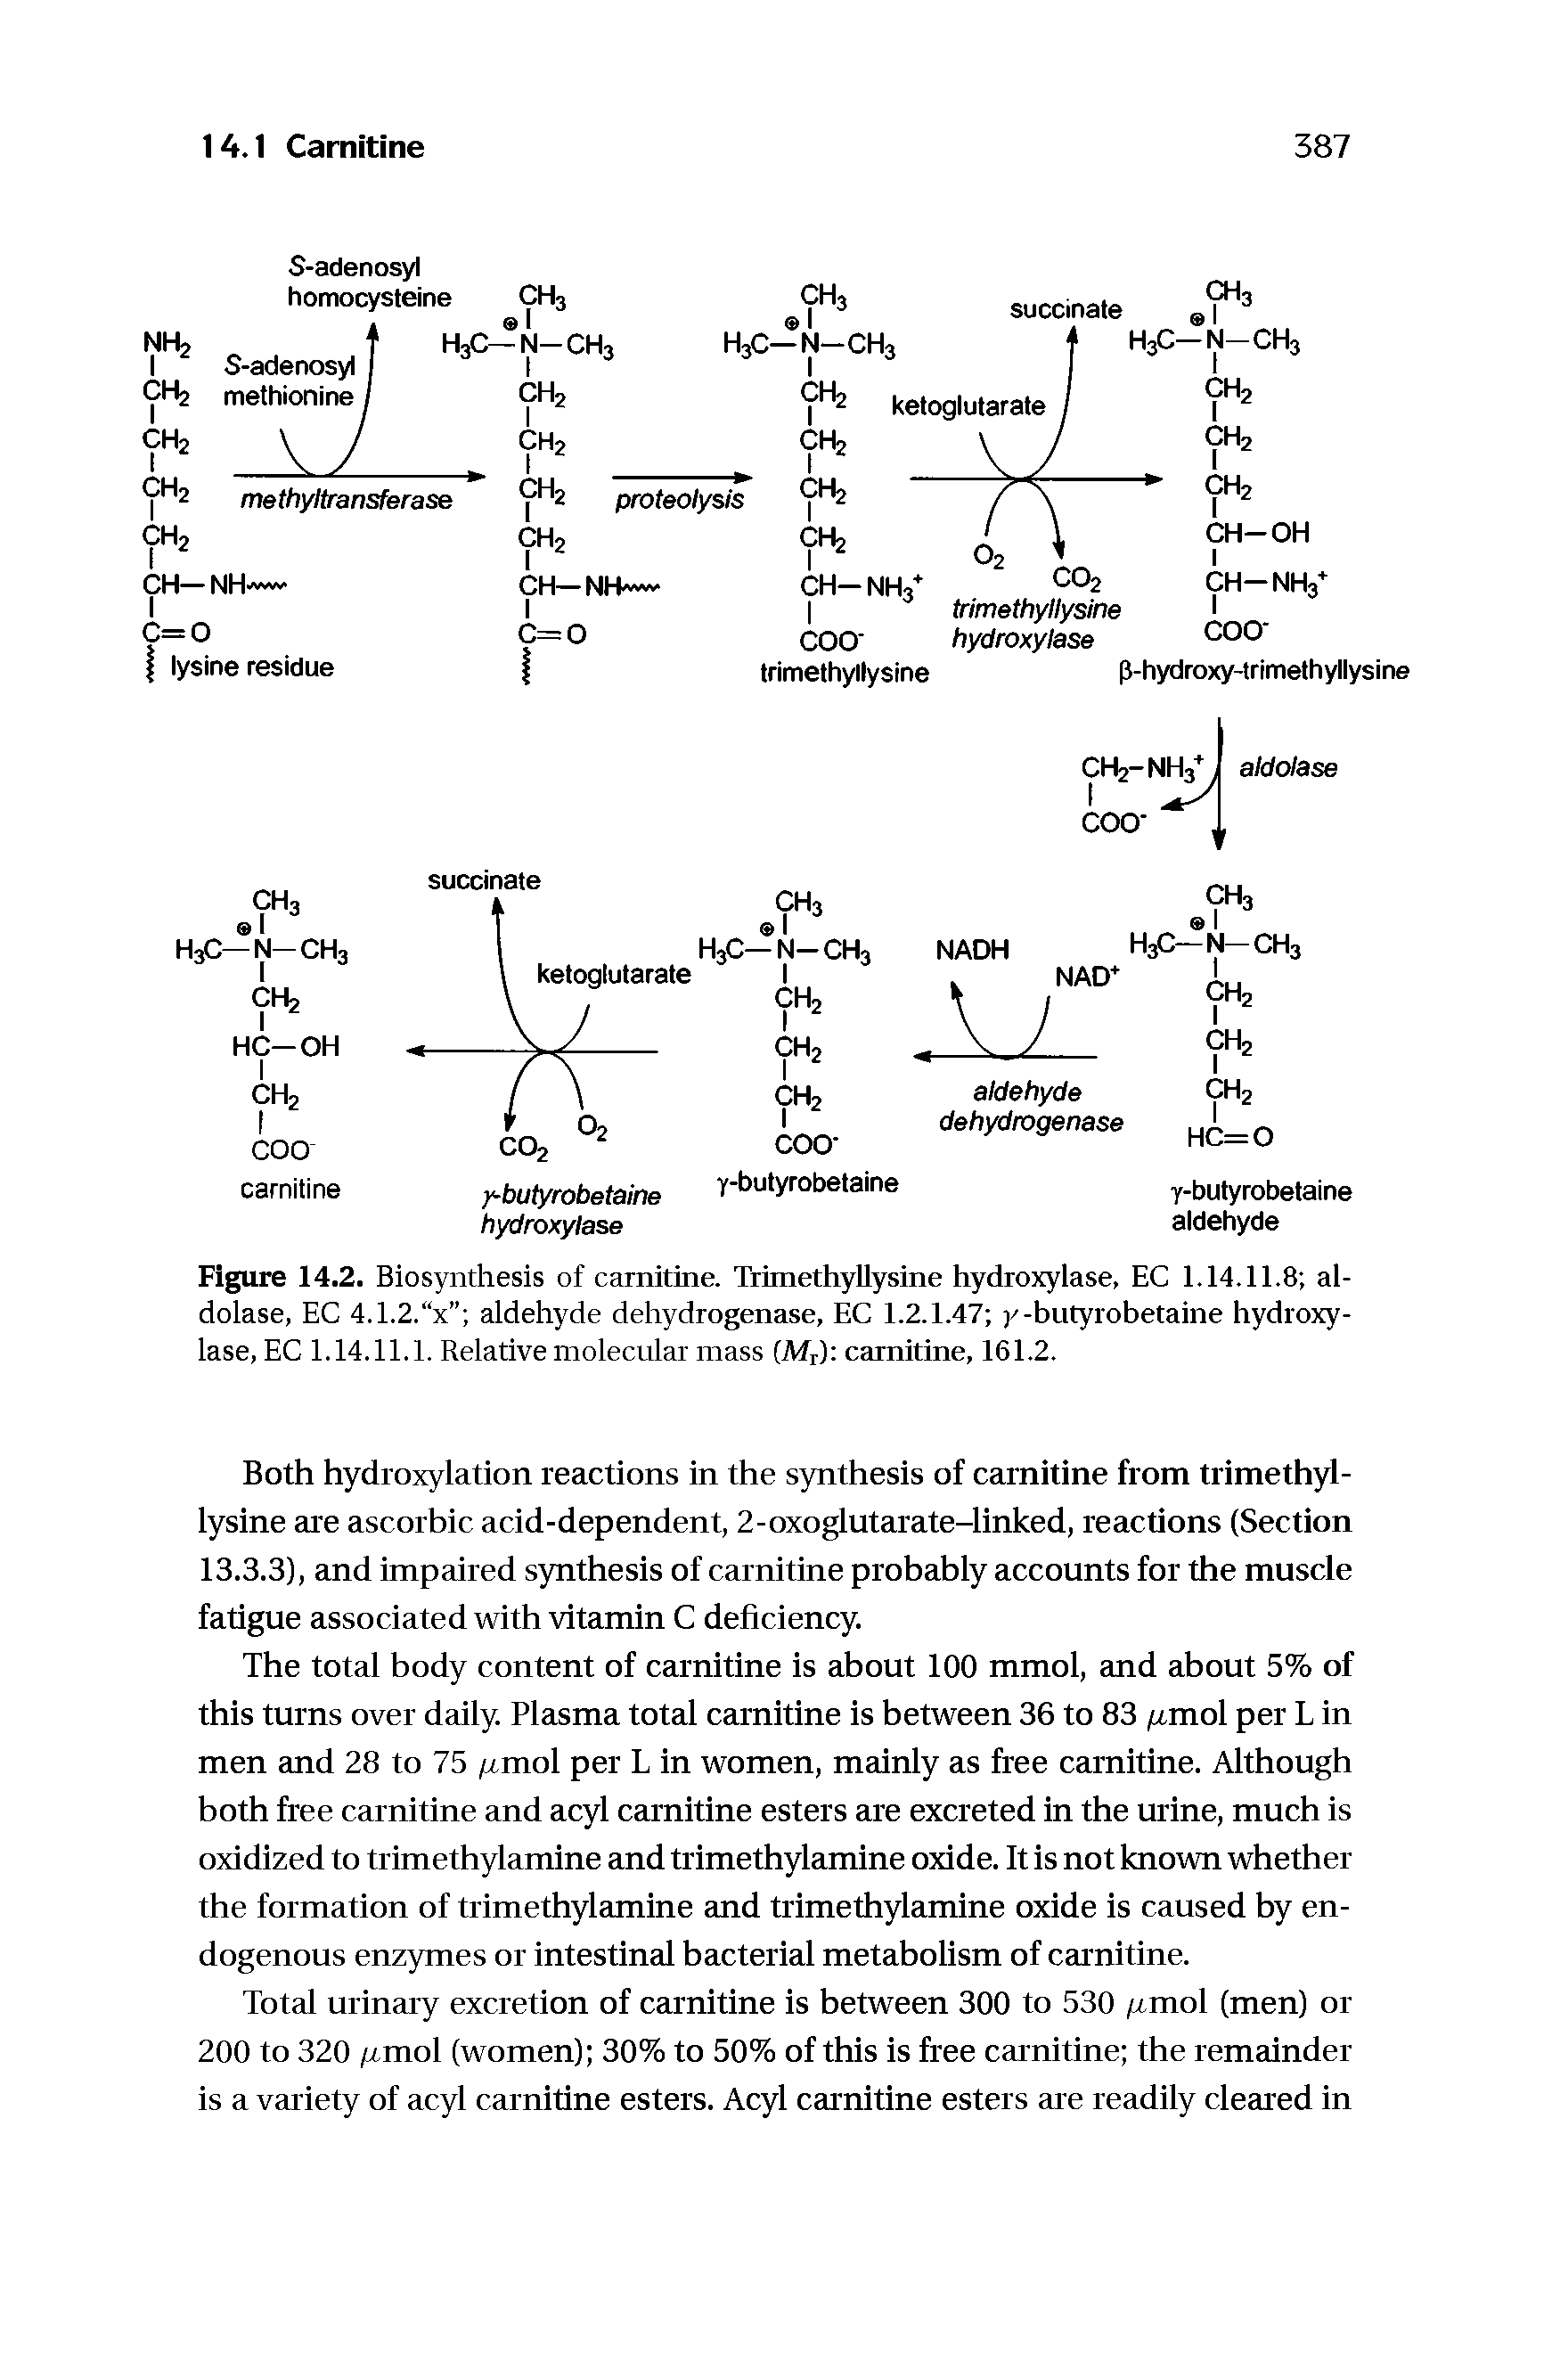 Figure 14.2. Biosynthesis of carnitine. Trimethyllysine hydroxylase, EC 1.14.11.8 aldolase, EC 4.1.2. x aldehyde dehydrogenase, EC 1.2.1.47 y-butyrobetaine hydroxylase, EC 1.14.11.1. Relative molecular mass (Mr) carnitine, 161.2.